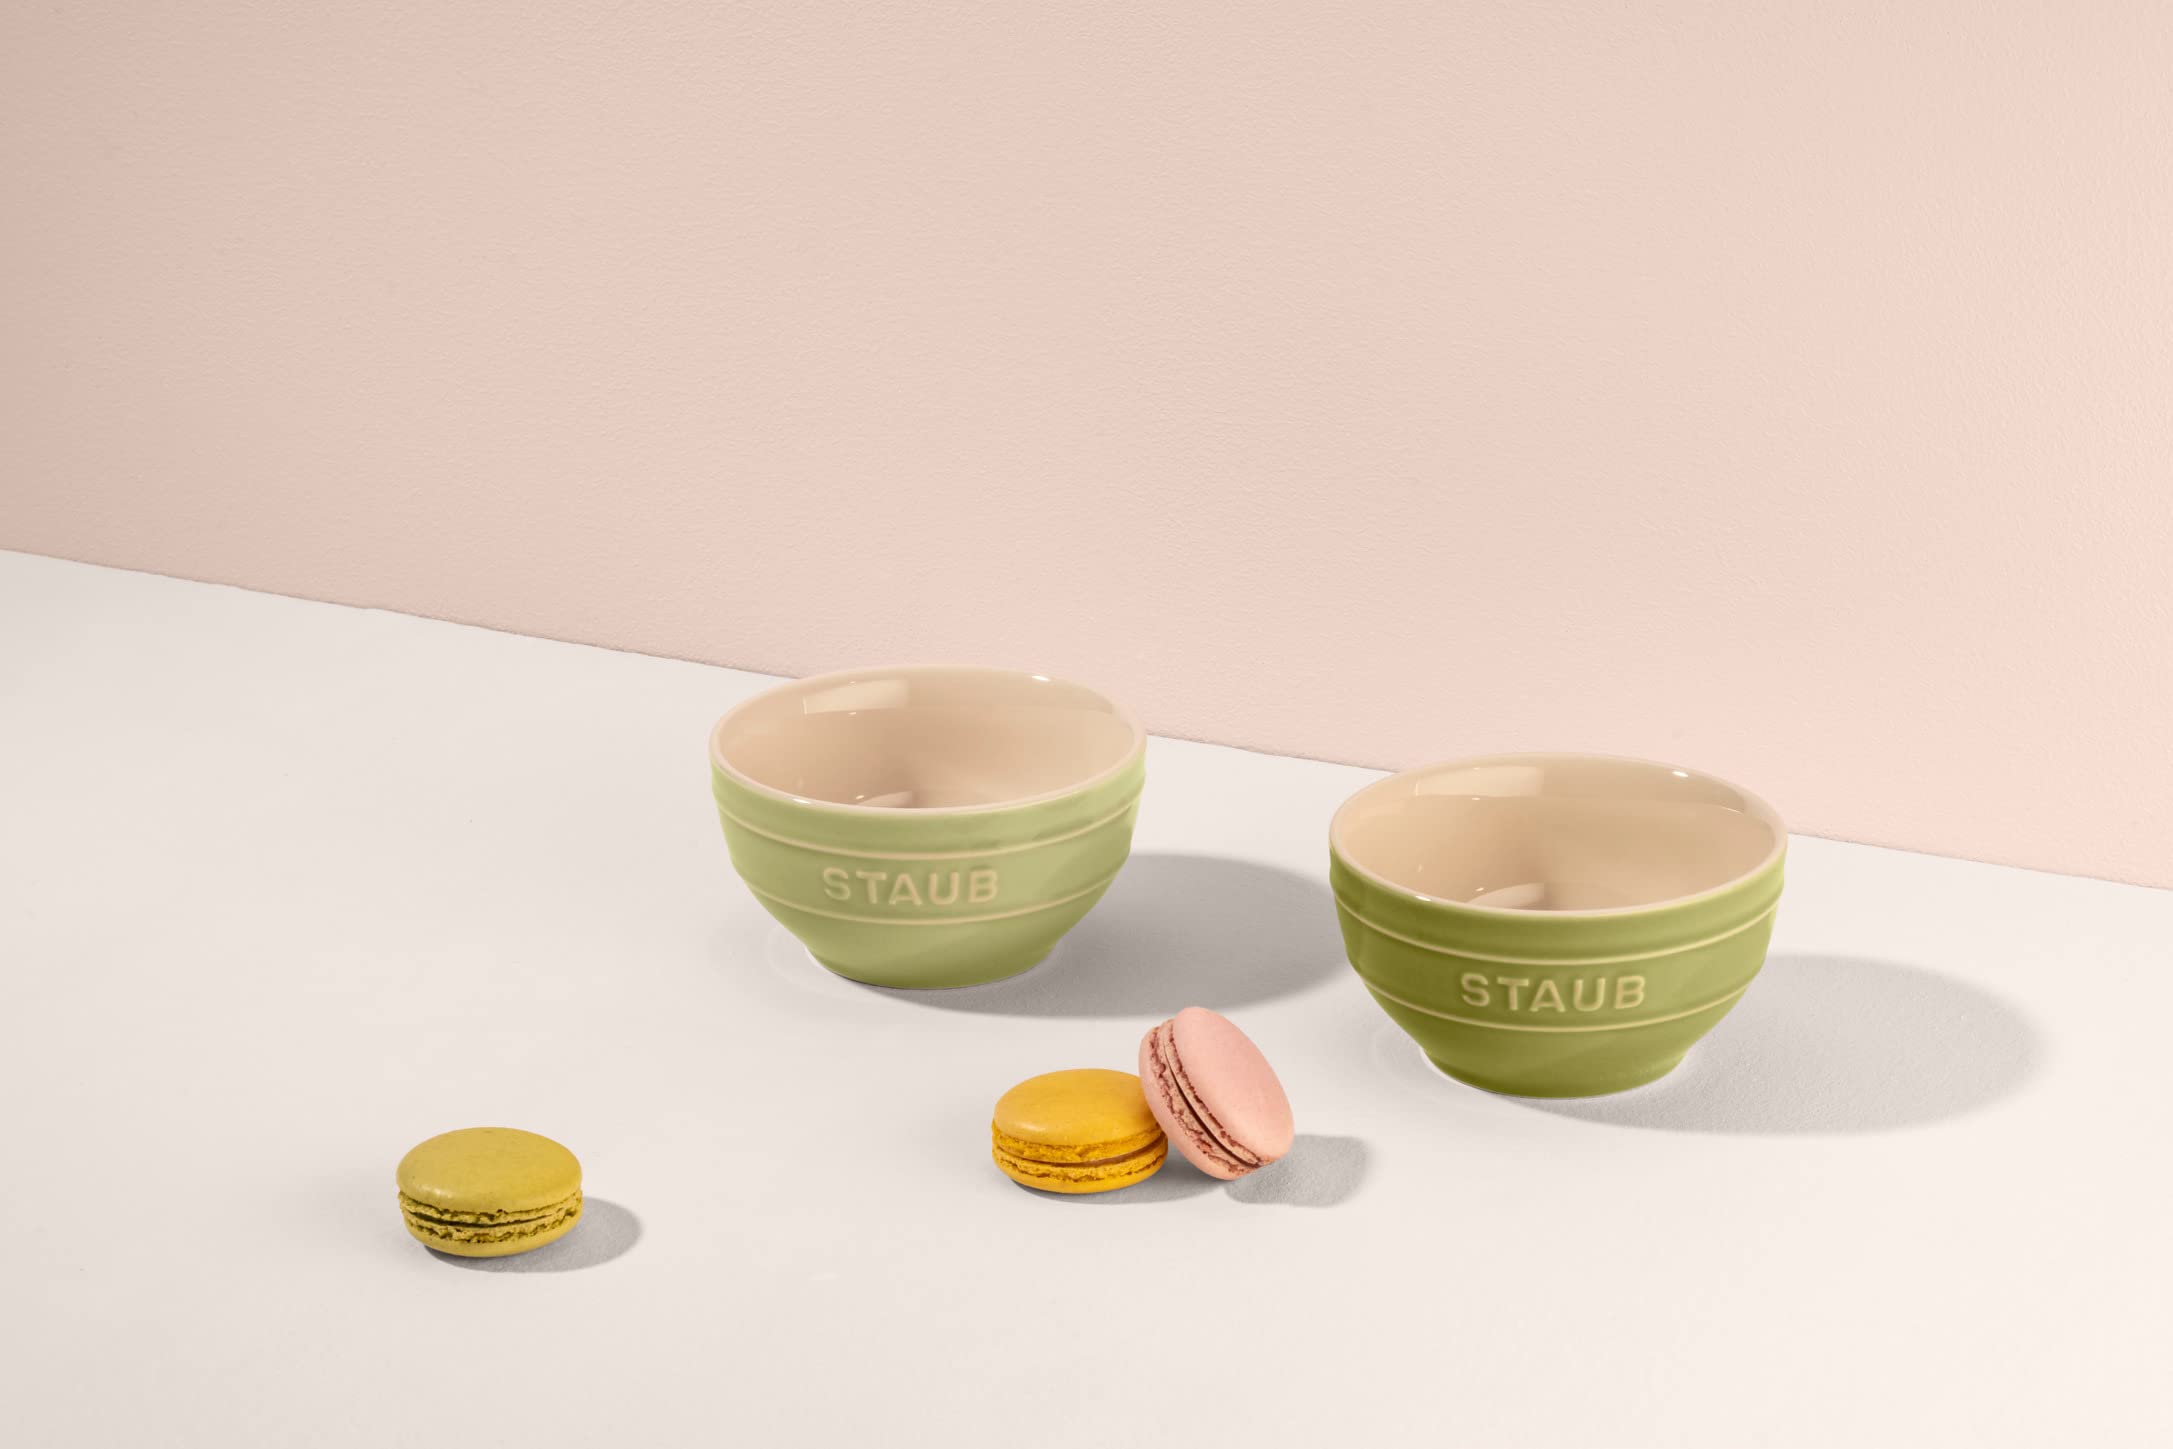 Staub Z1023-687 Ceramic Bowl, Ceramic, 4.7 inches (12 cm), Set of 2, Macaron Green, Ceramic, Small Bowl, Microwave Safe, Ceramic Bowl